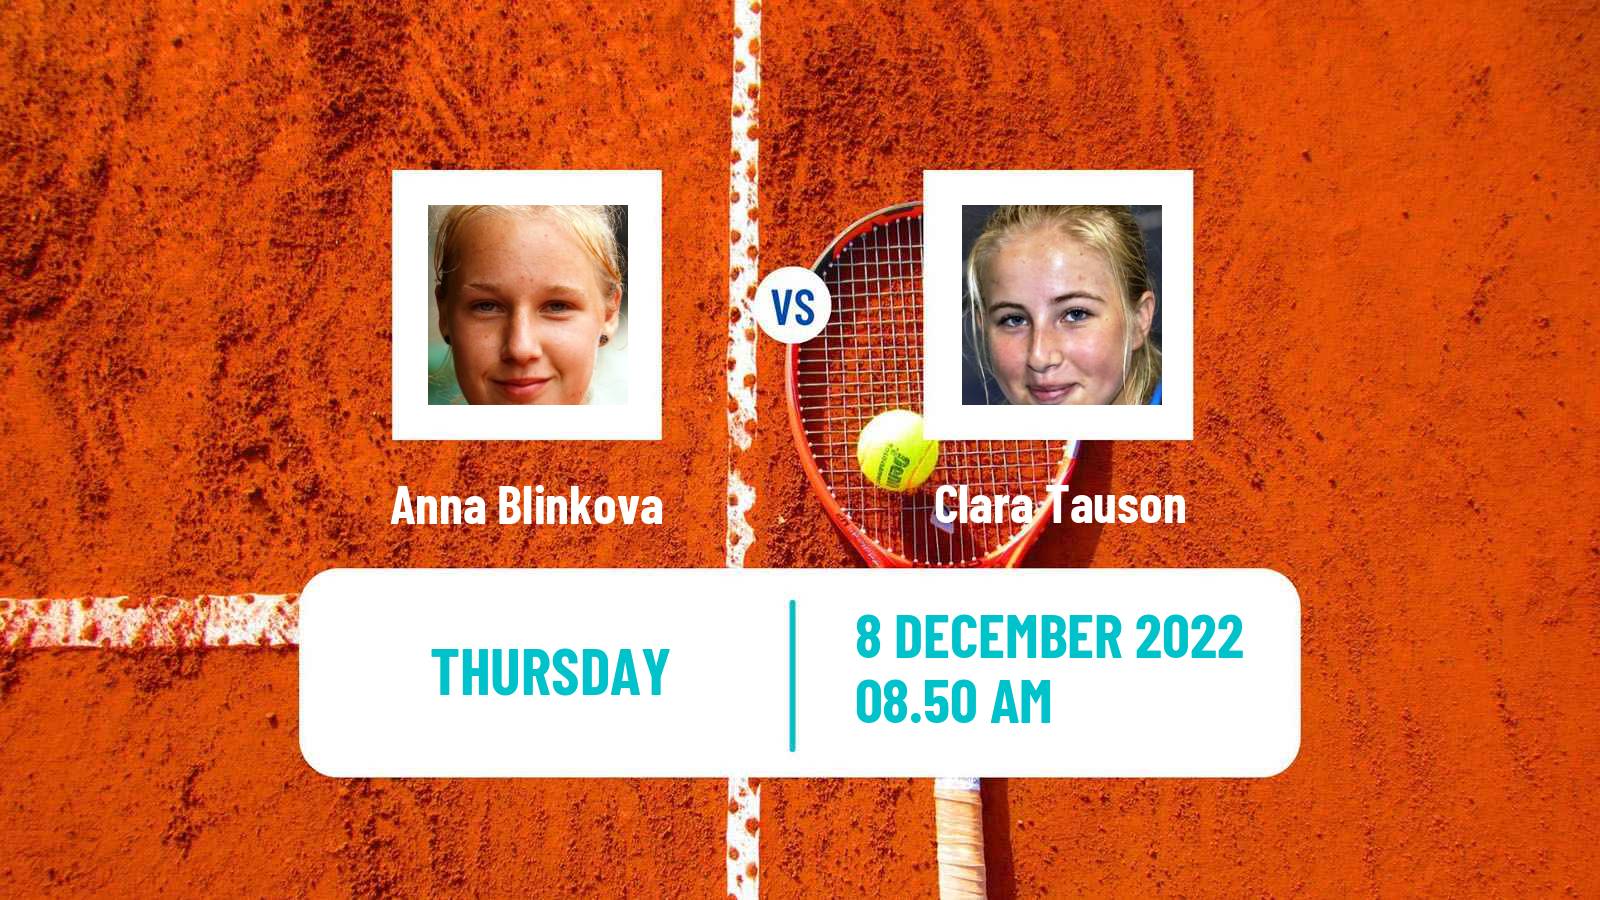 Tennis ATP Challenger Anna Blinkova - Clara Tauson